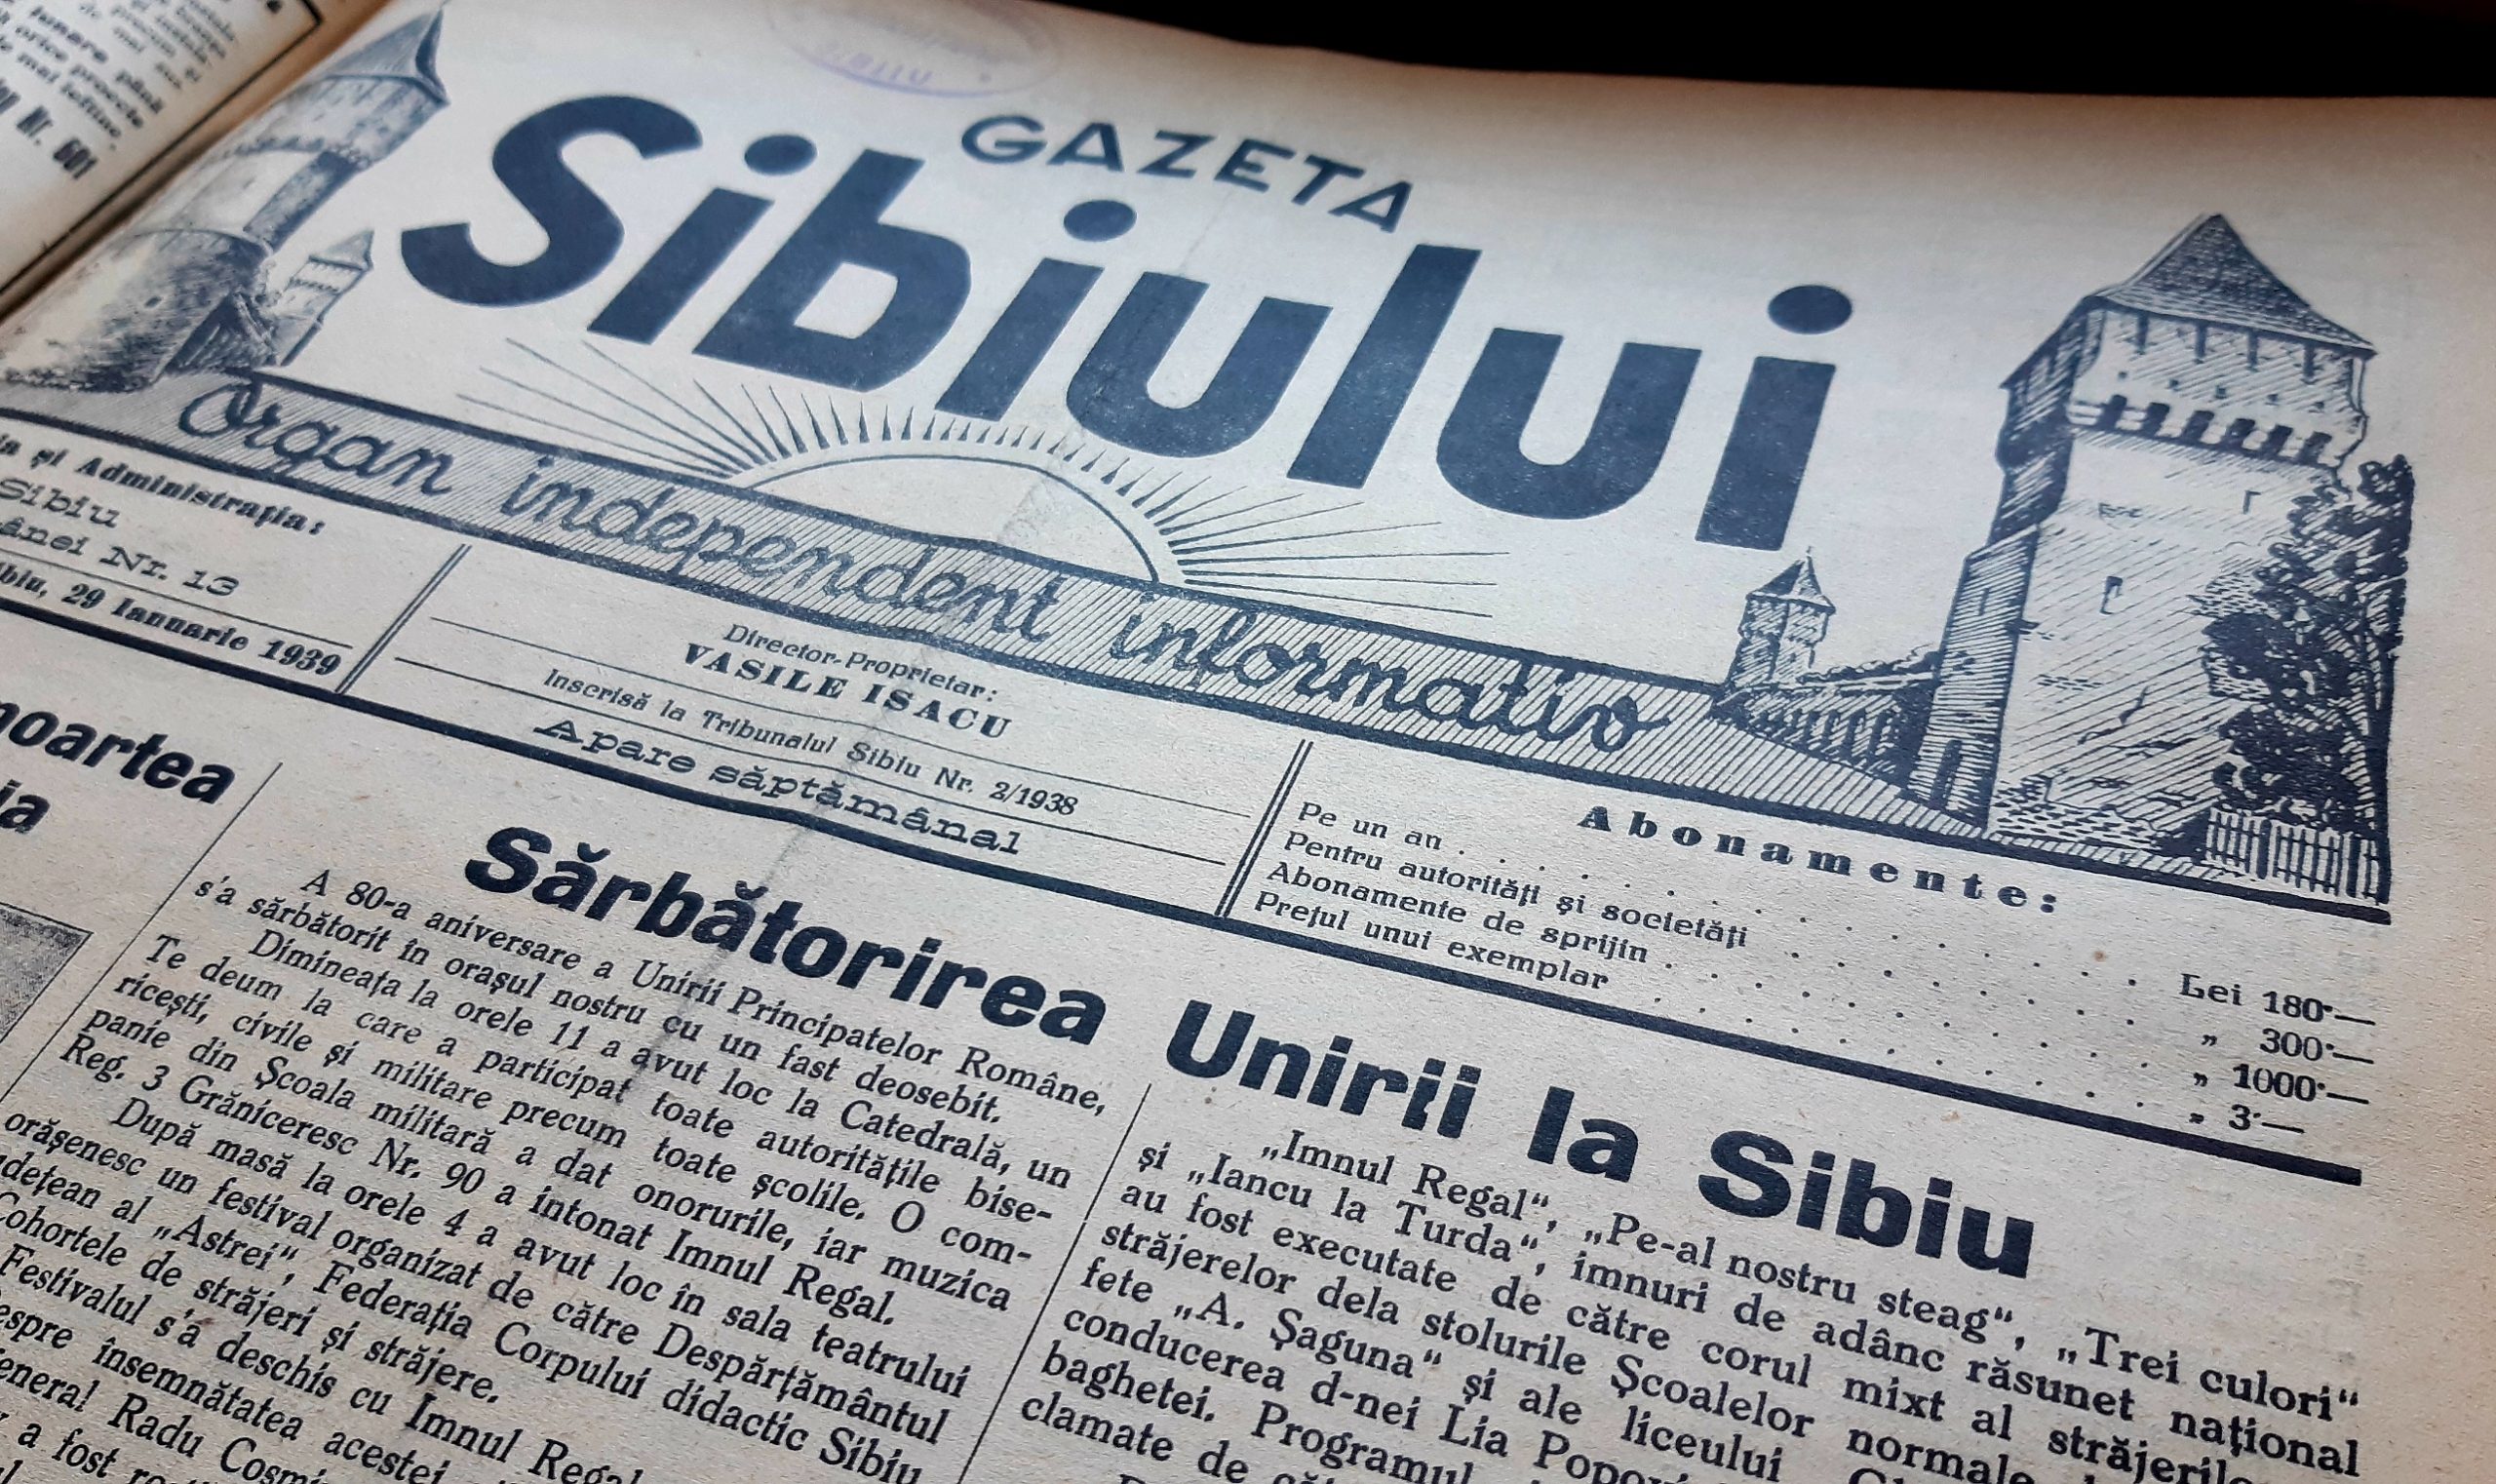 Gazeta Sibiului BJ ASTRA scaled